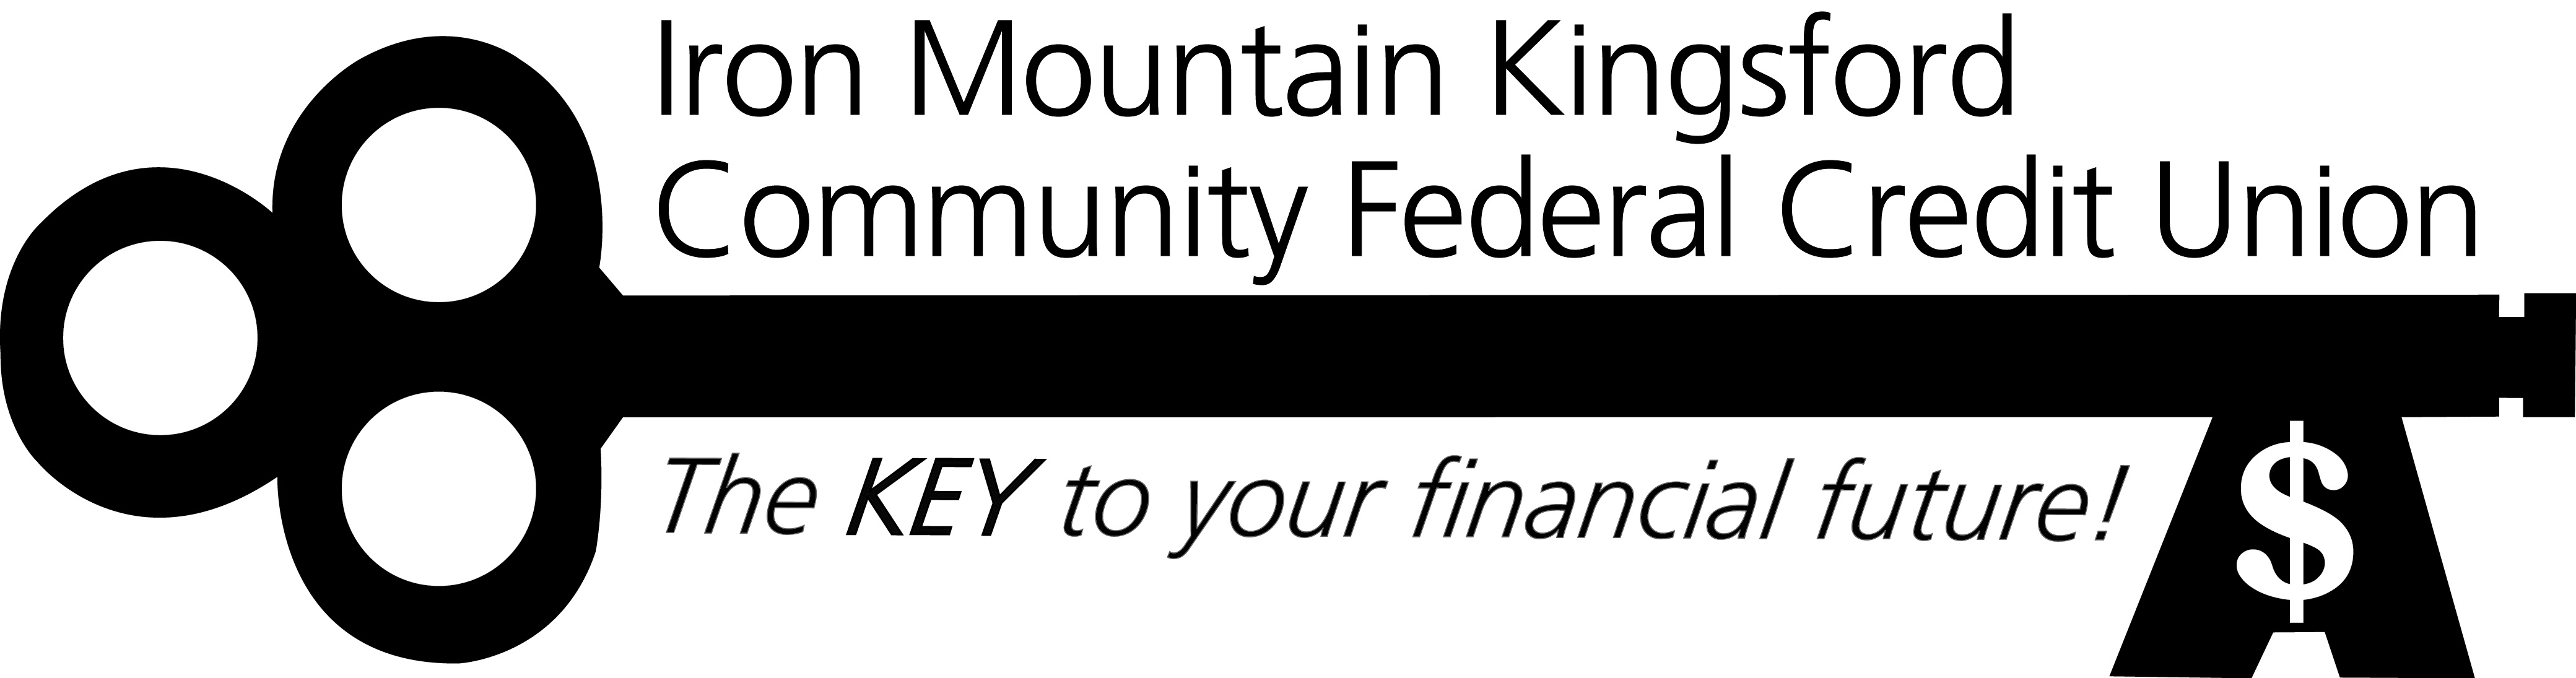 Iron Mountain Kingsford Community FCU logo